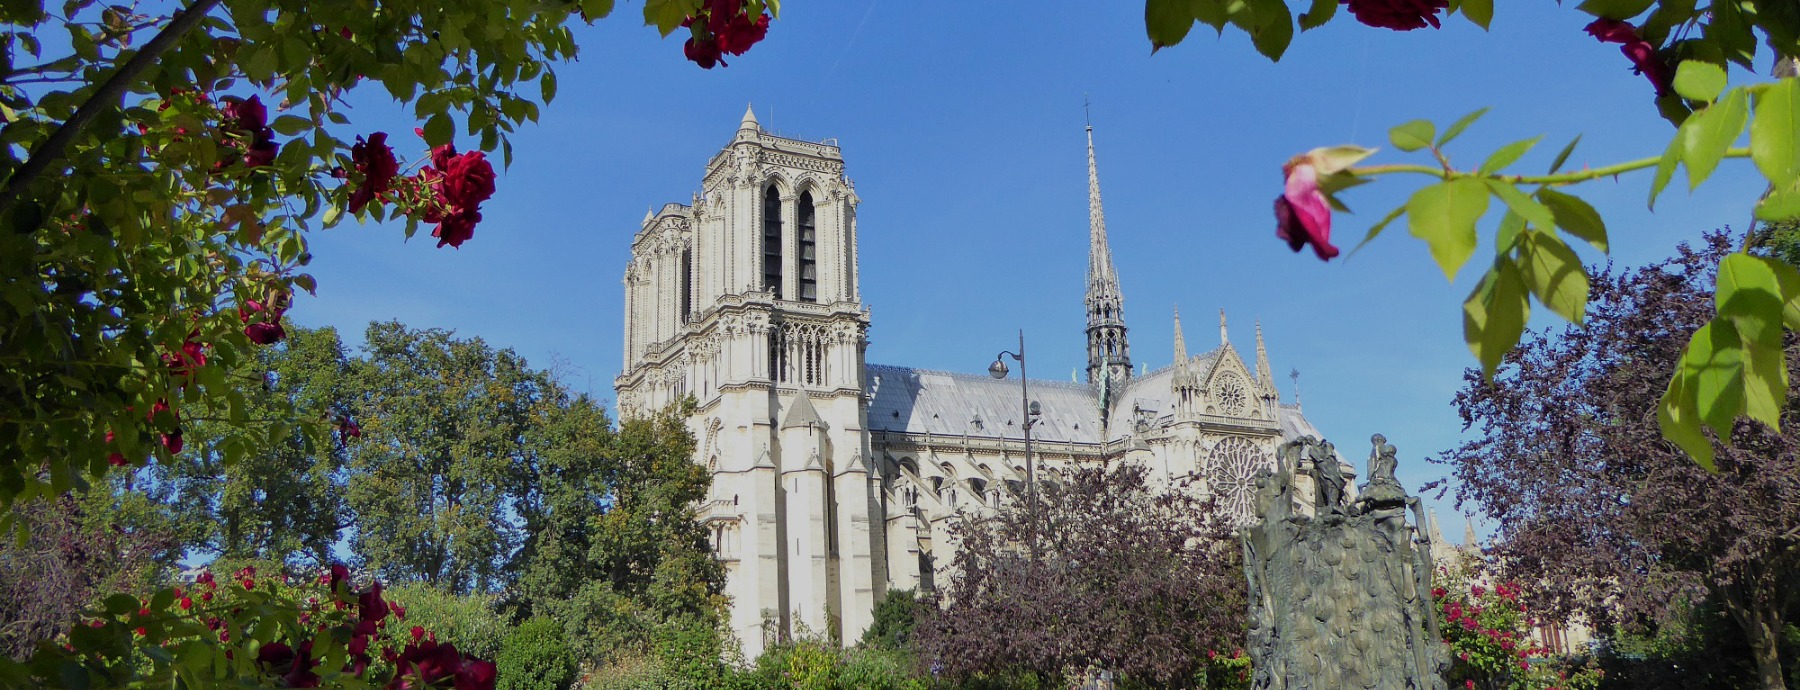 Northern France Paris Notre Dame